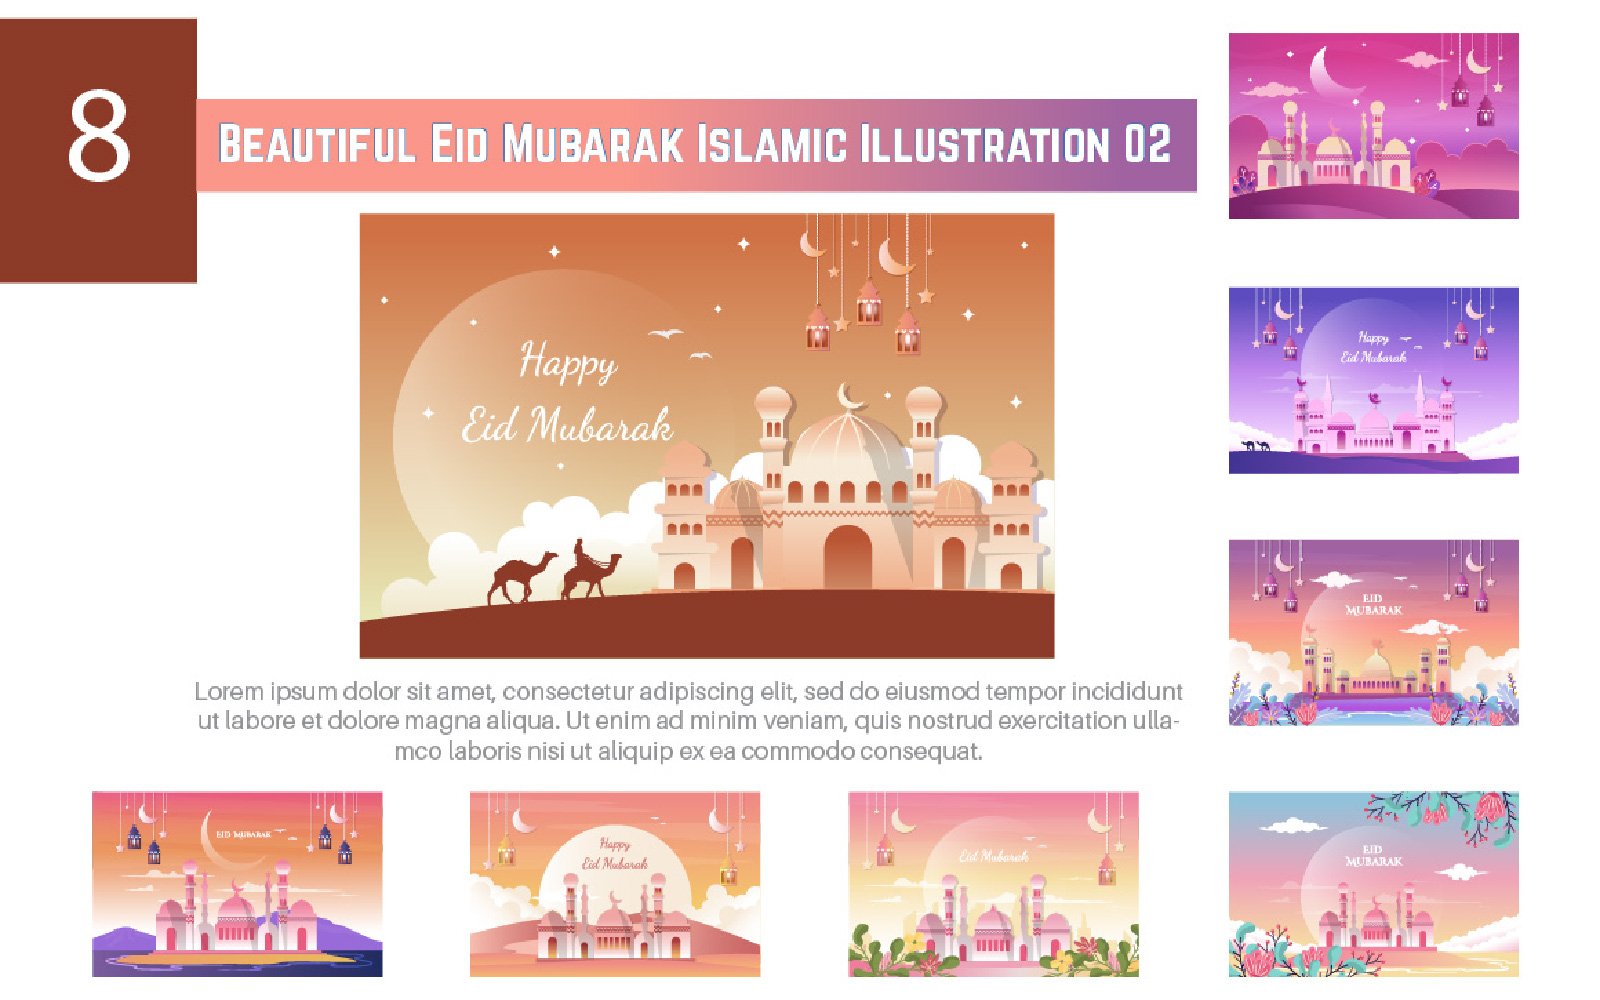 8 Beautiful Eid Mubarak Islamic Illustration 02